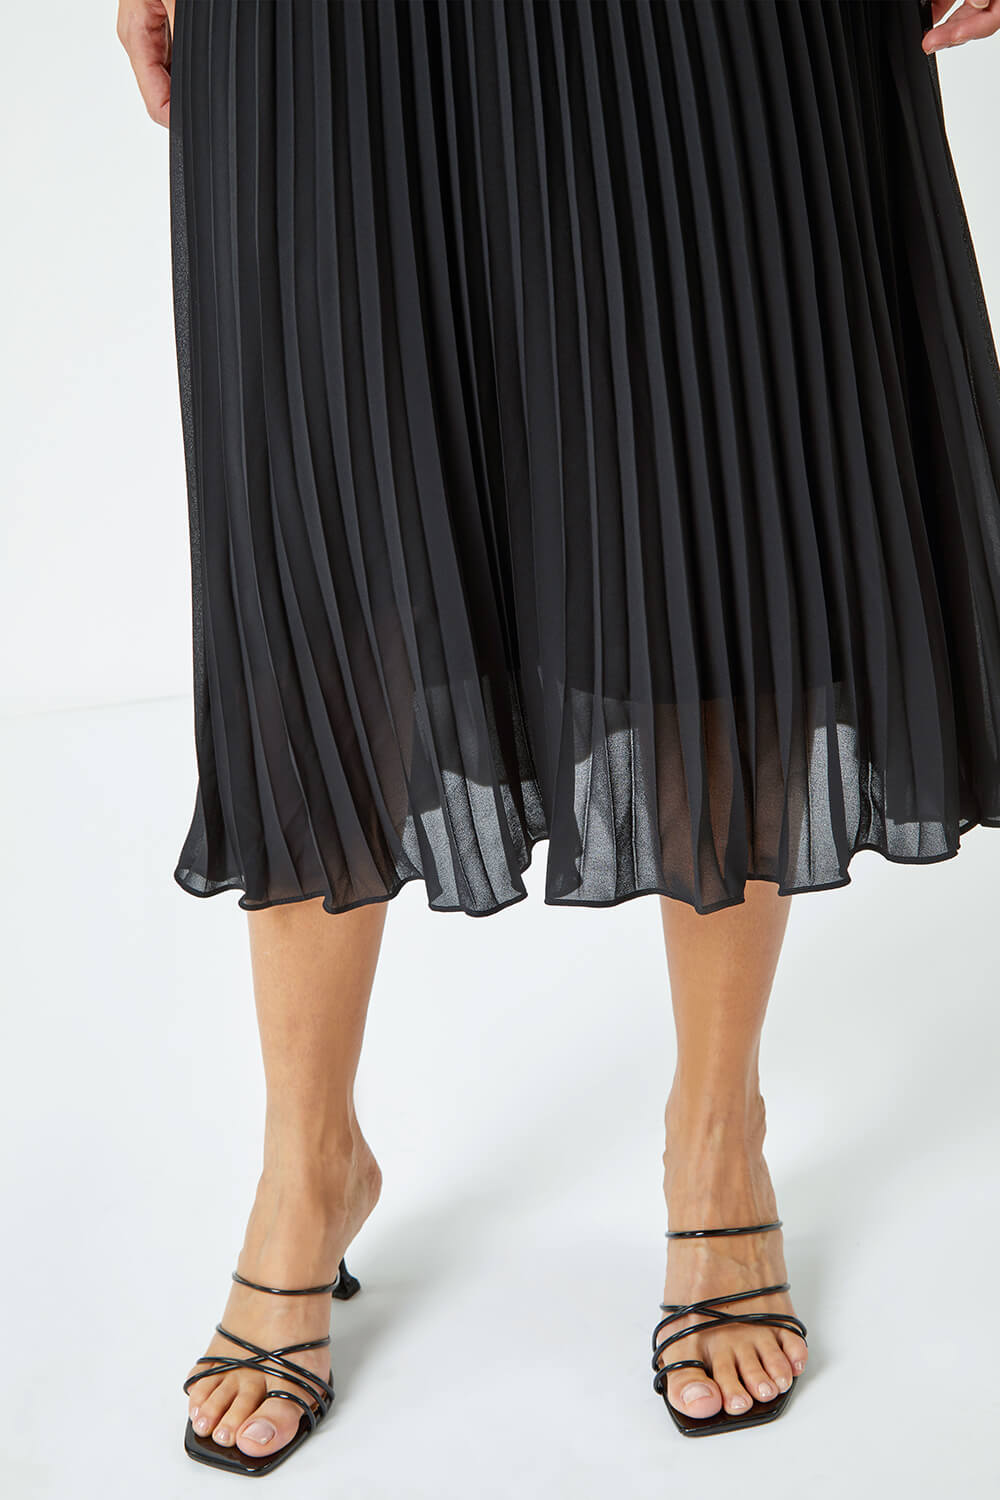 Black Lace Top Overlay Pleated Midi Dress, Image 5 of 5